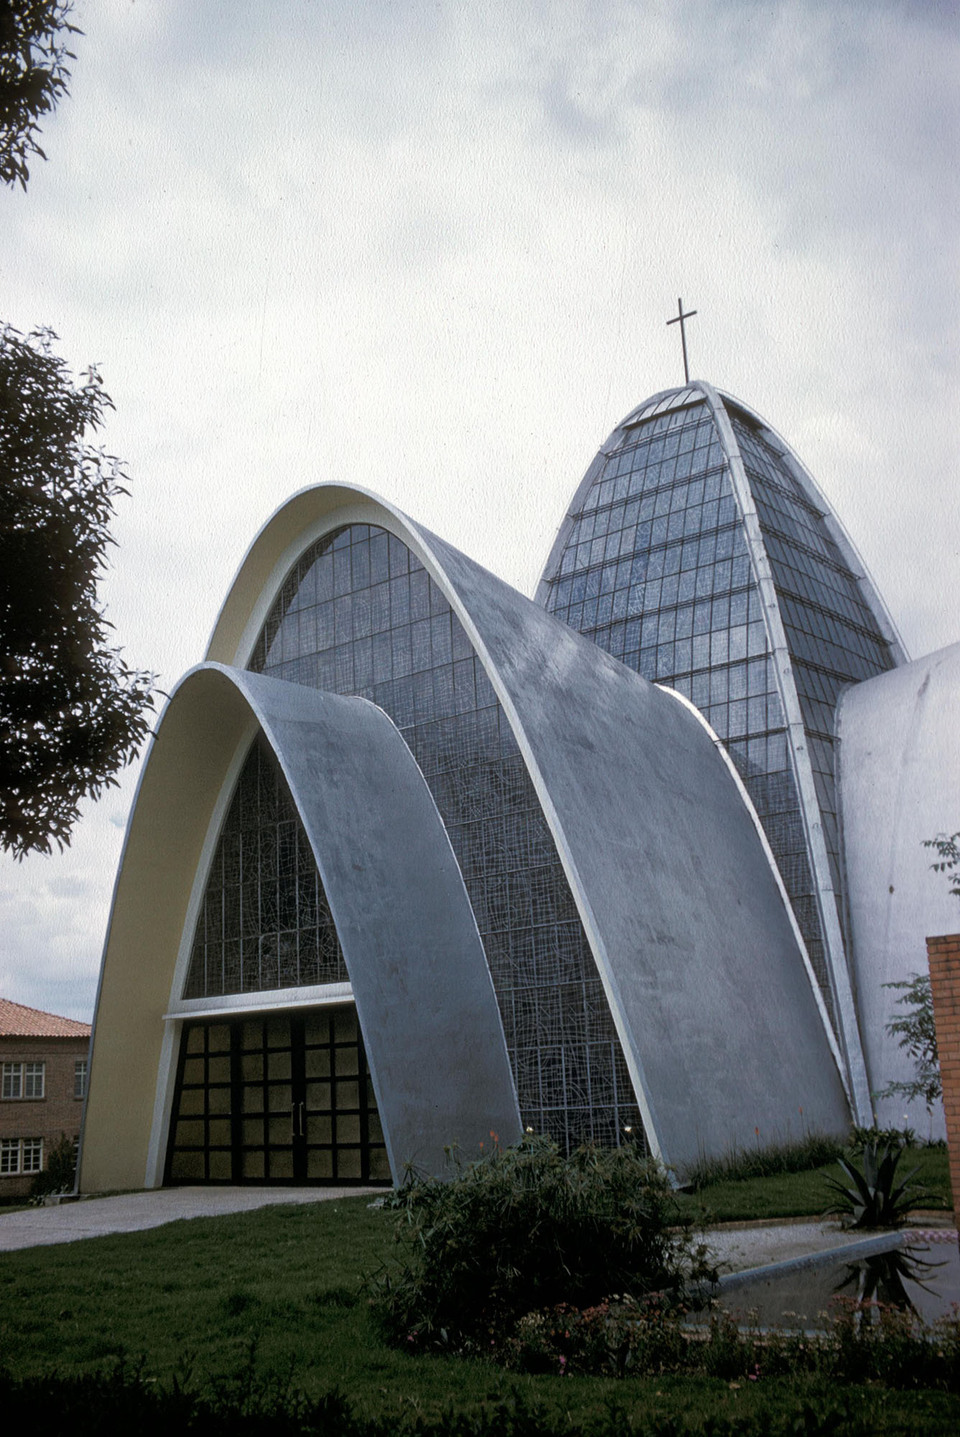 A Gimnasio Moderno kápolnája, Bogotá, Juvenal Moya Cardenas, 1951-1954. Fotó: 1960, Louis Redstone ajándéka, University of Michigan Library